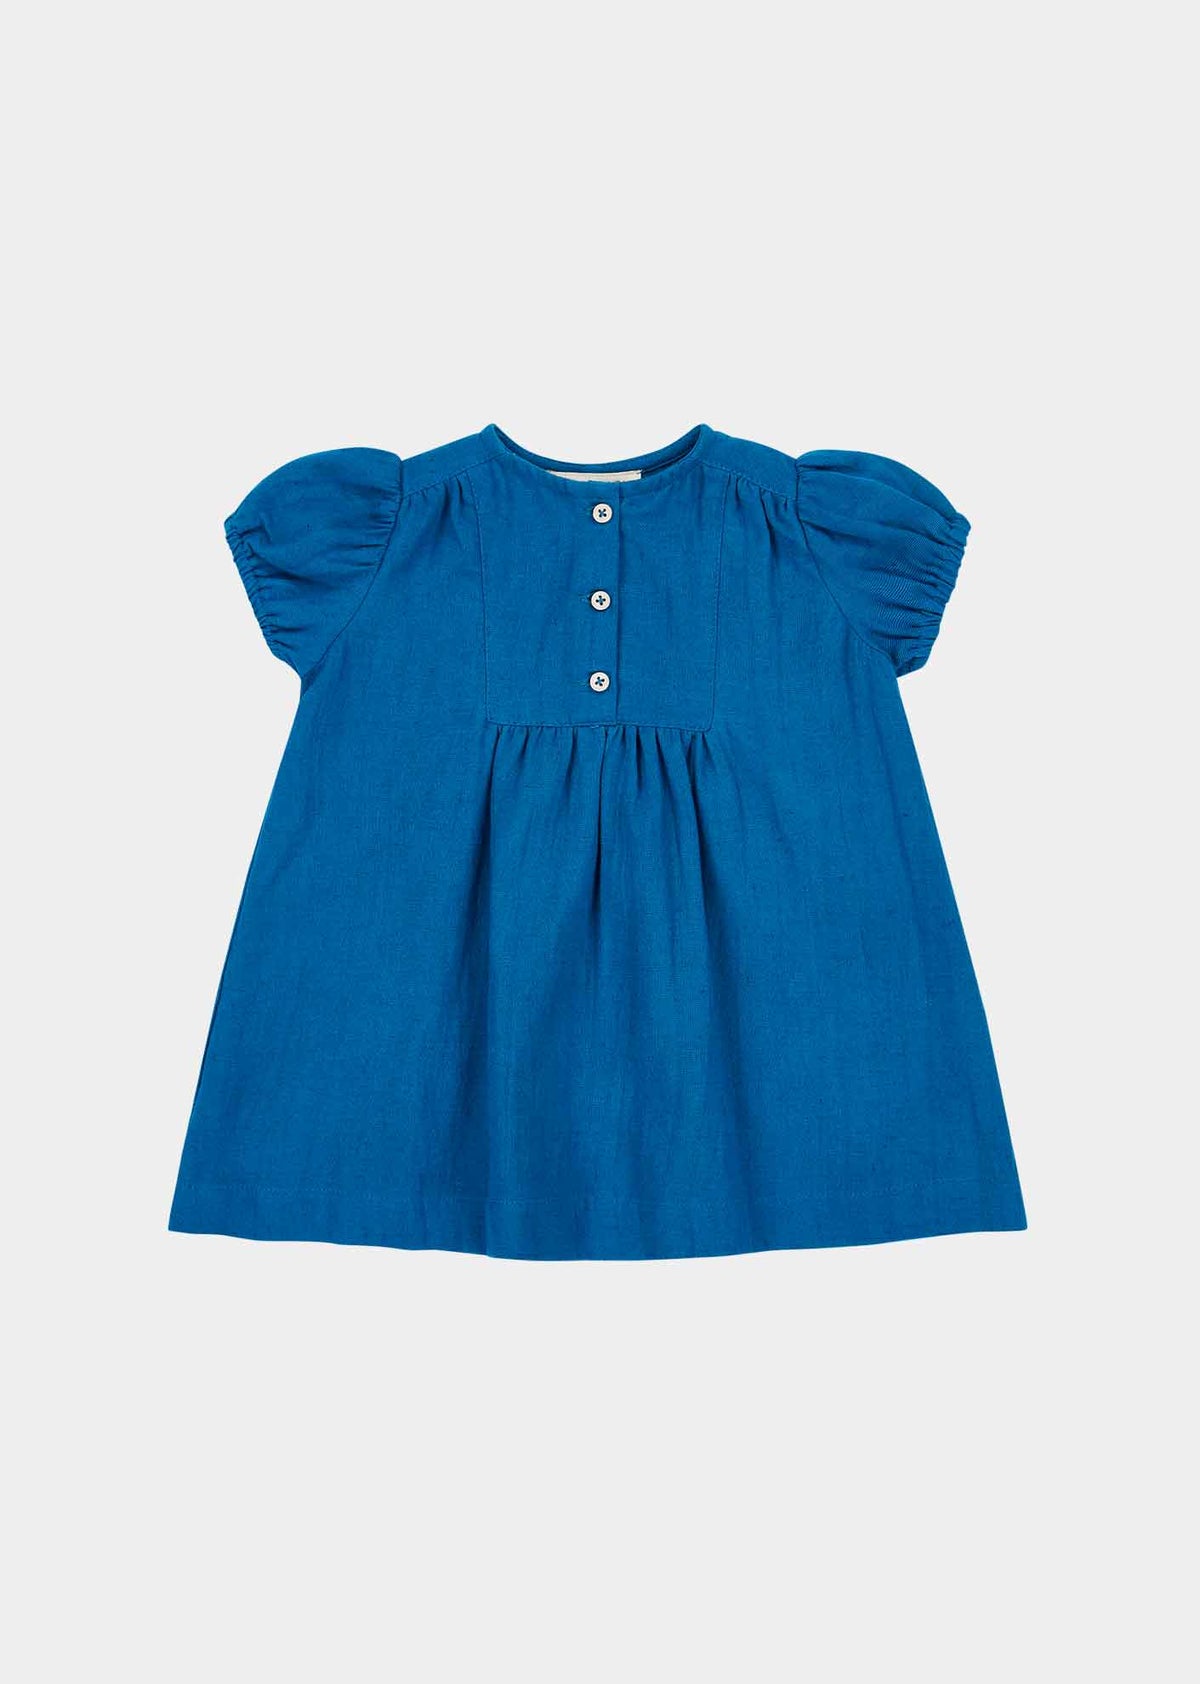 YARRROW BABY DRESS - ELECTRIC BLUE